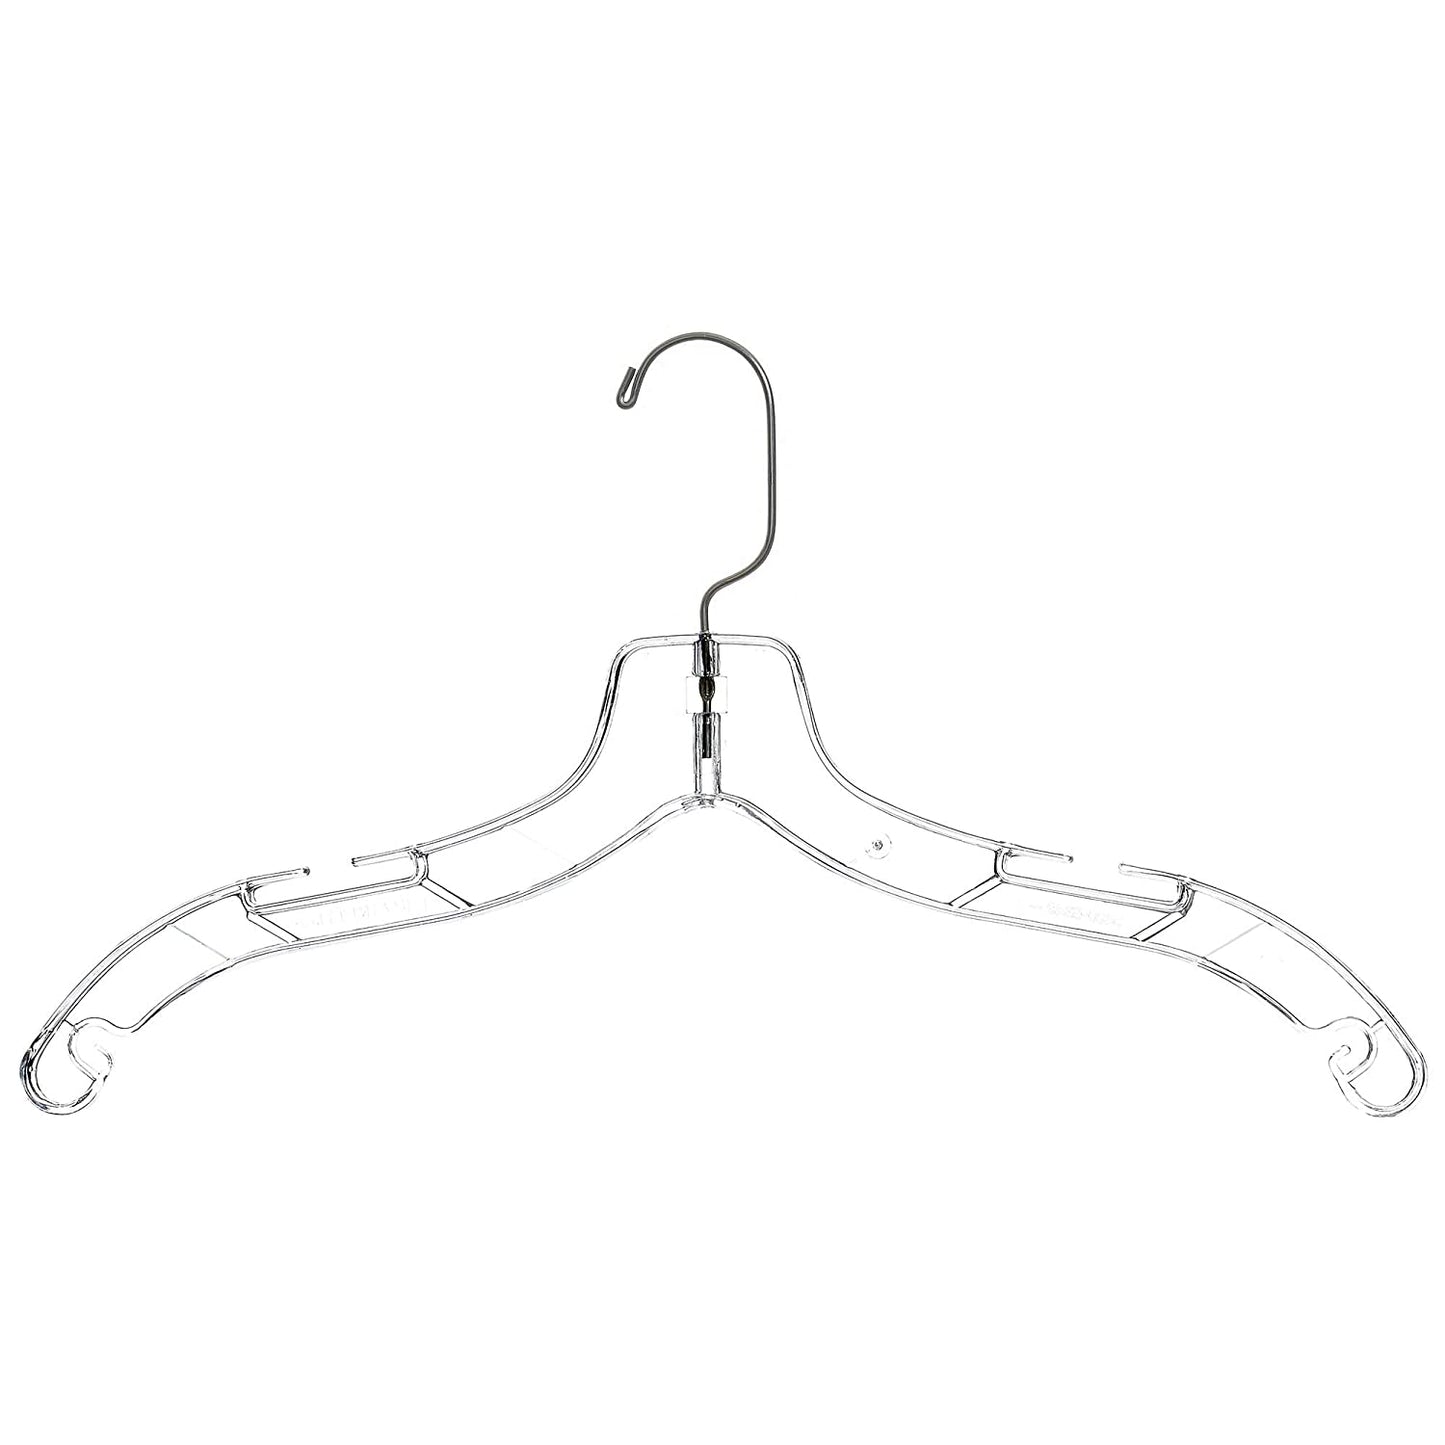 43cm Clear Plastic Coat Hanger (100% transparent) Sold in Bundles of 25/50/100 - Rackshop Australia